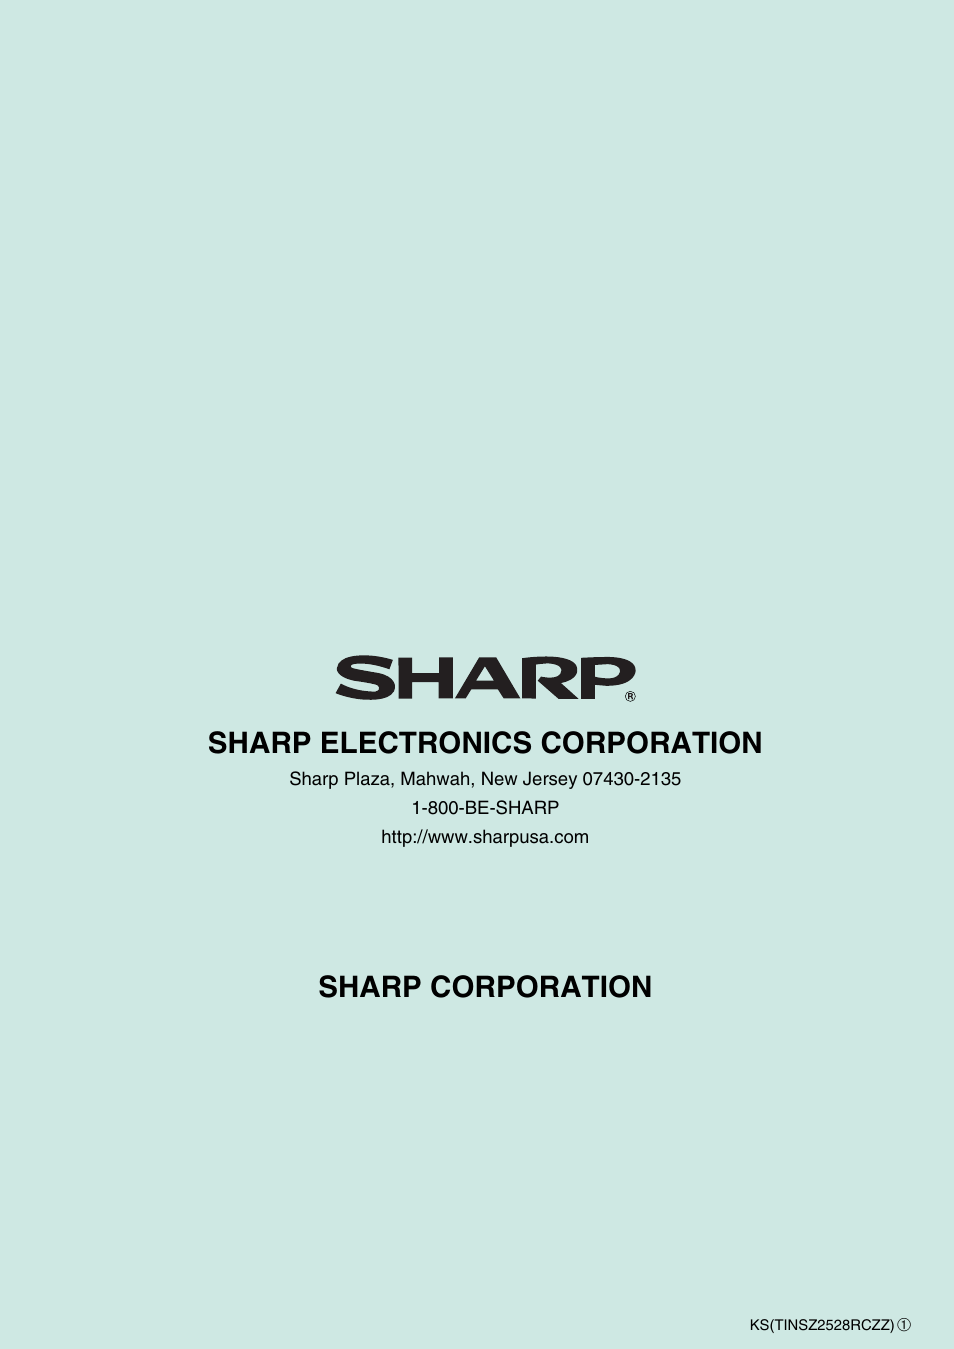 Sharp electronics corporation sharp corporation | Sharp Electronic Cash Register XE-A402 User Manual | Page 124 / 124